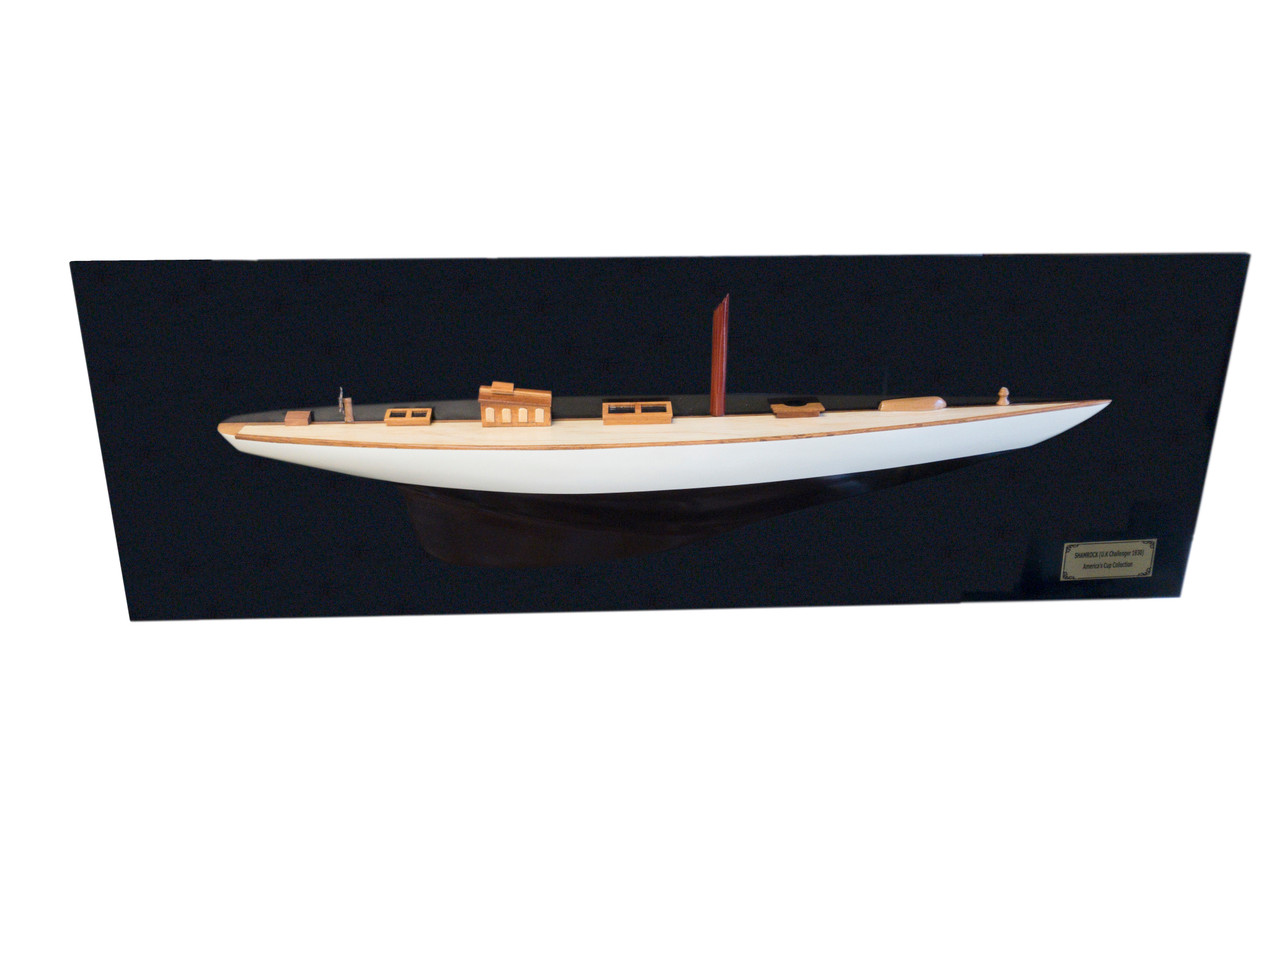 Painted Shamrock Half-Hull Model Boat - 35.5"